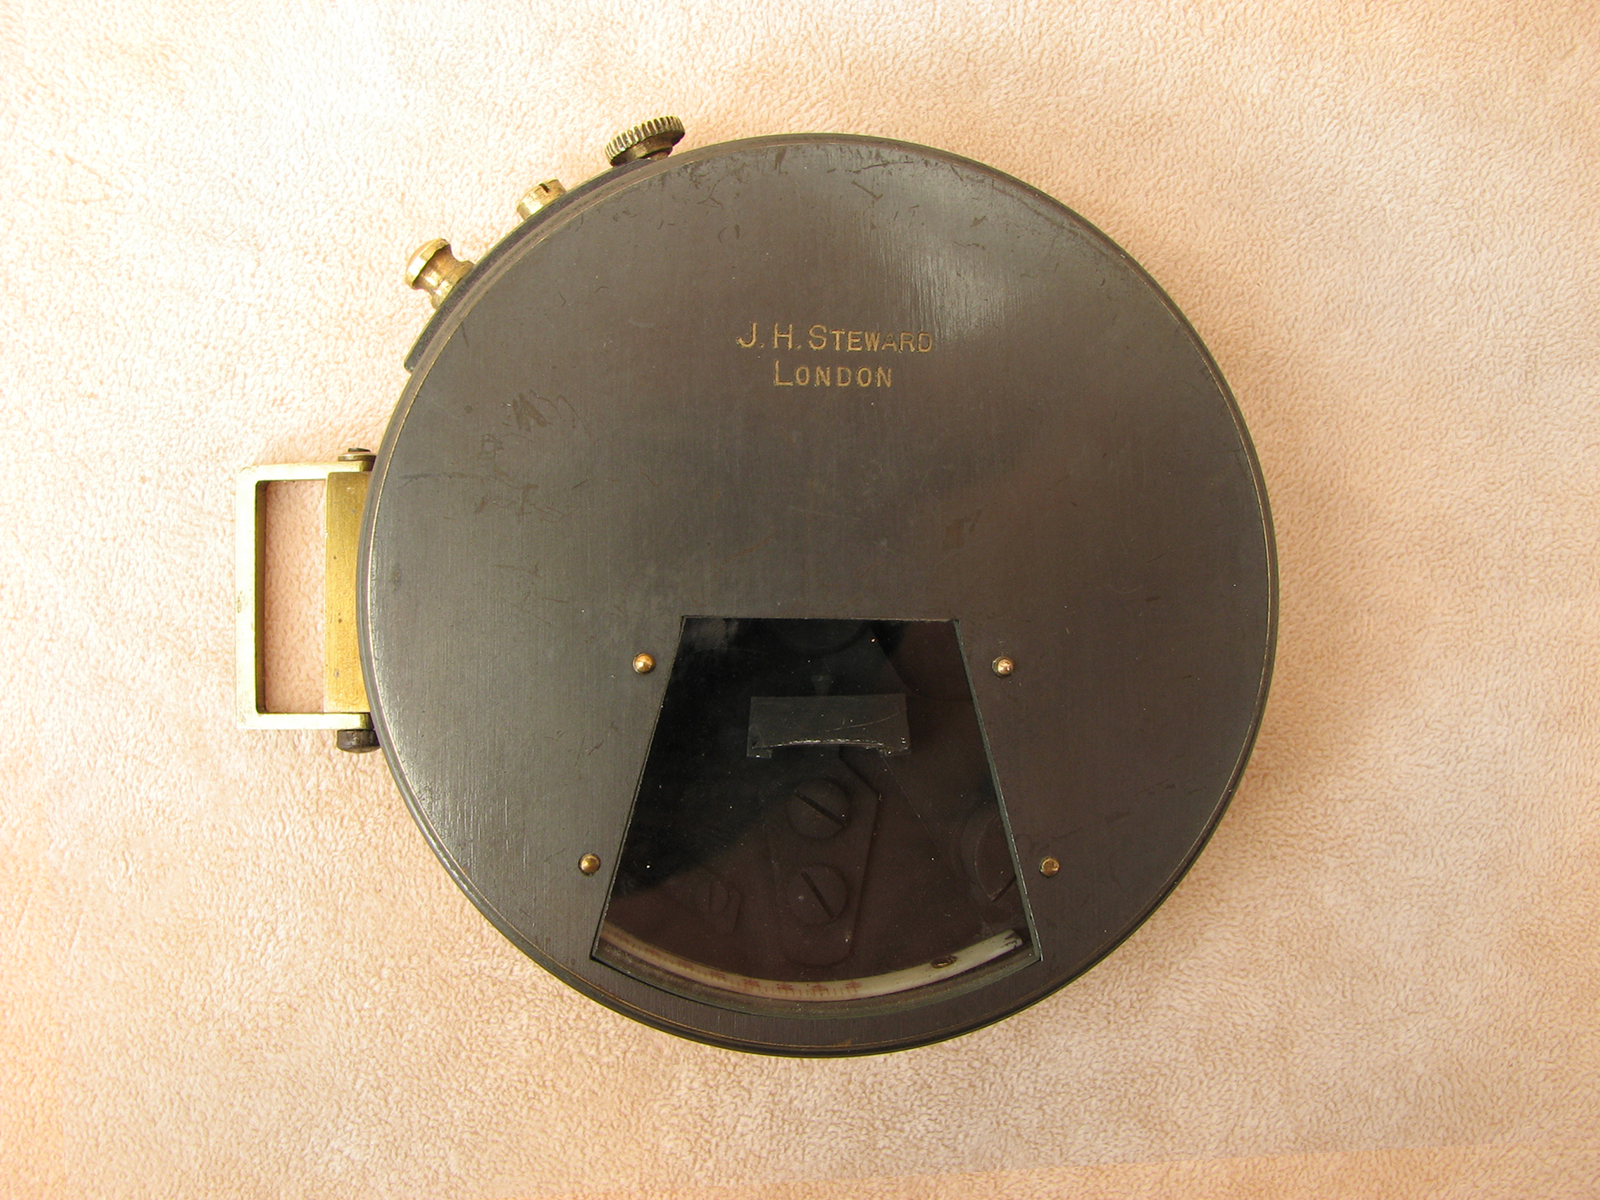 Pre WW1 drum clinometer by J.H. Steward, London.